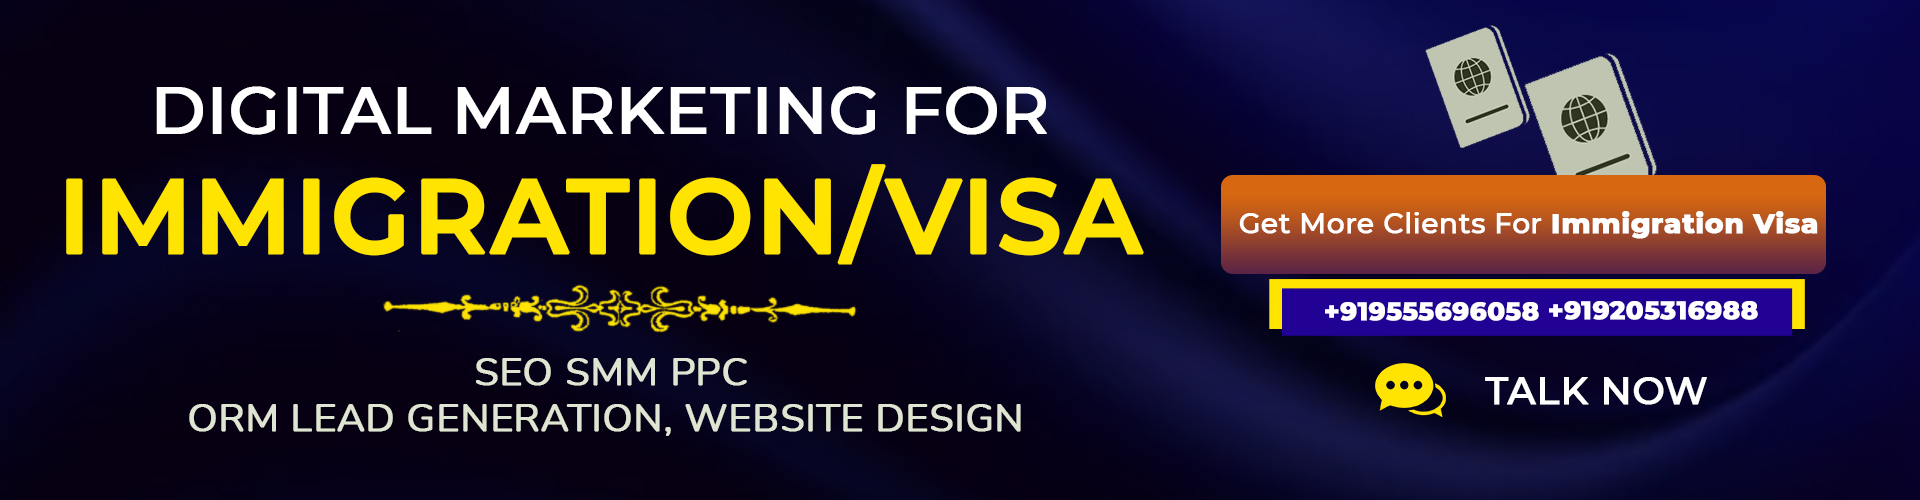 digital marketing for visa immigration company